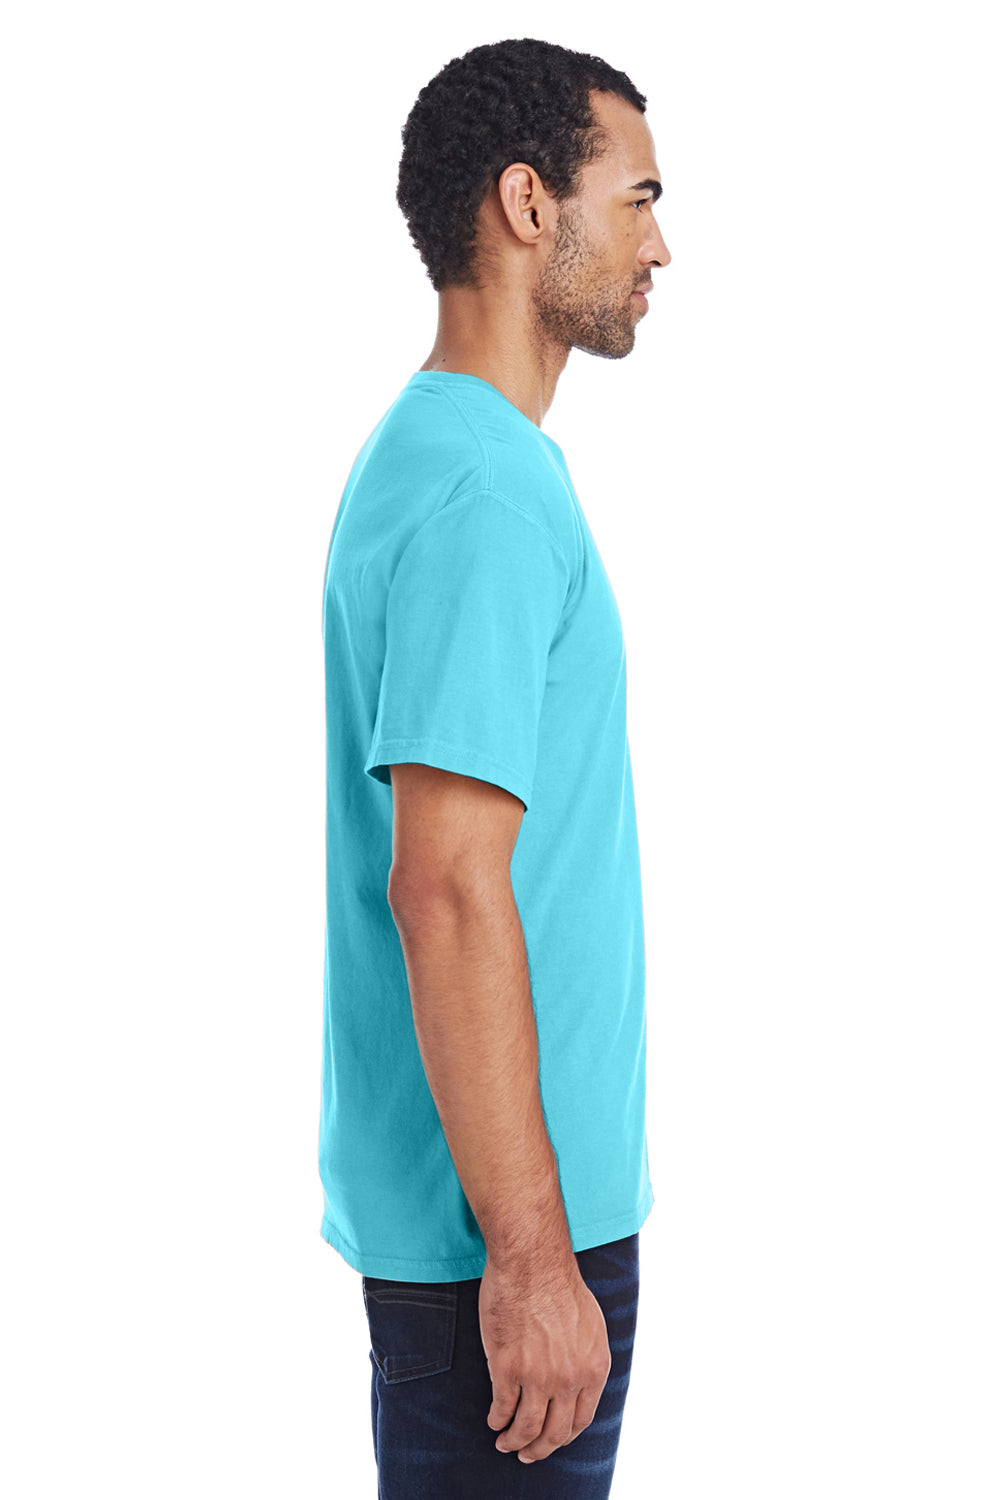 ComfortWash by Hanes GDH100 Short Sleeve Crewneck T-Shirt Freshwater Blue Side